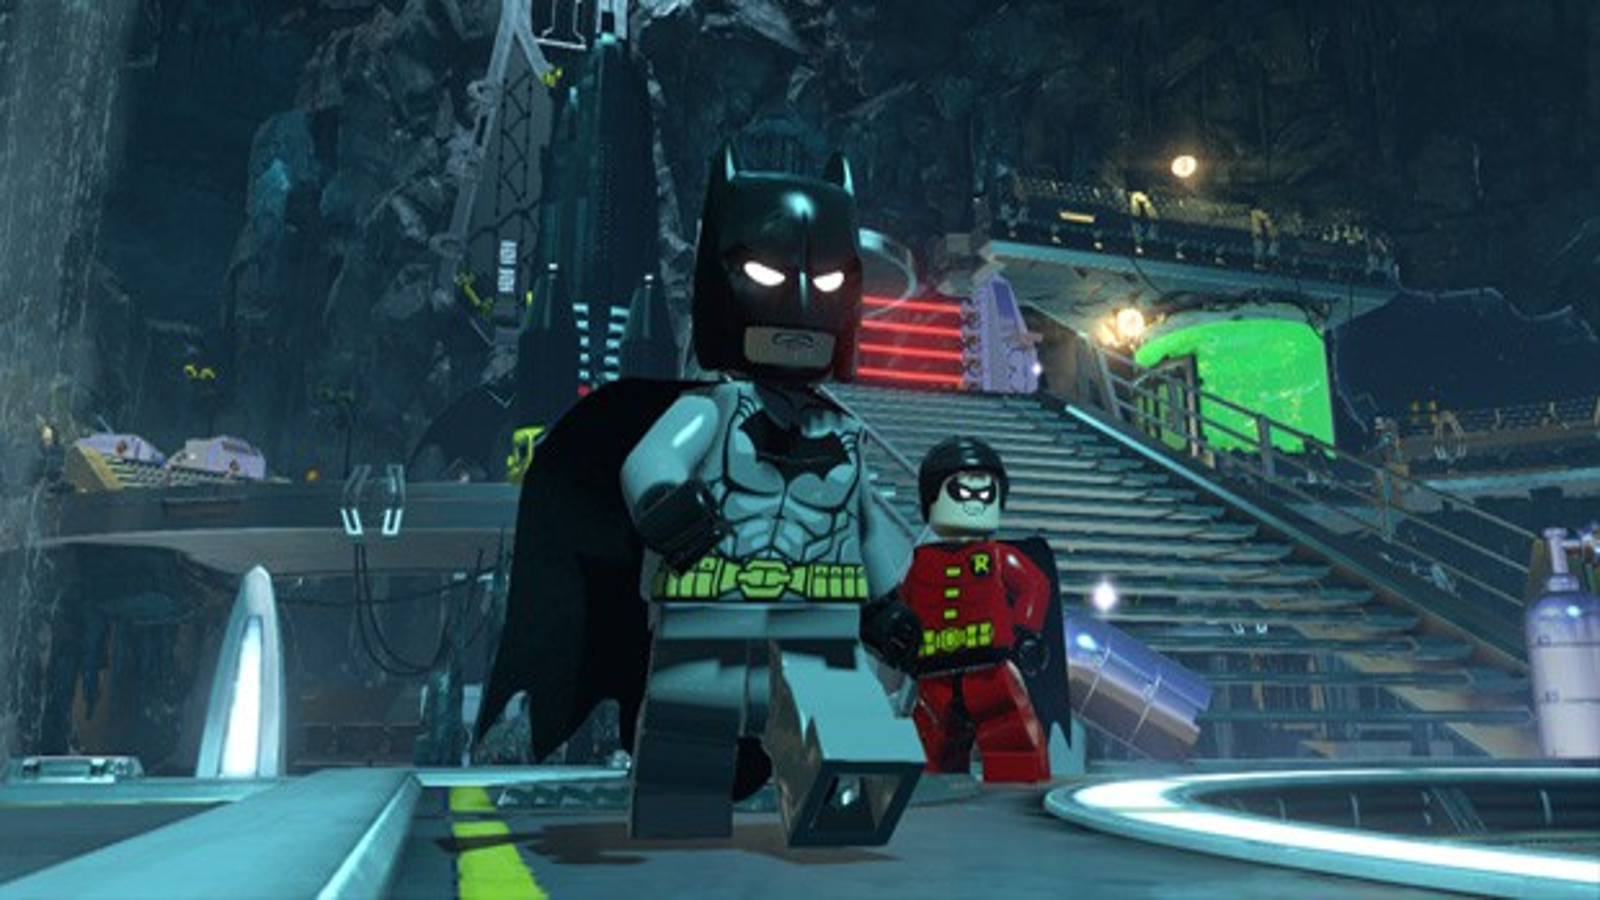 Lego Batman 1 Video Game